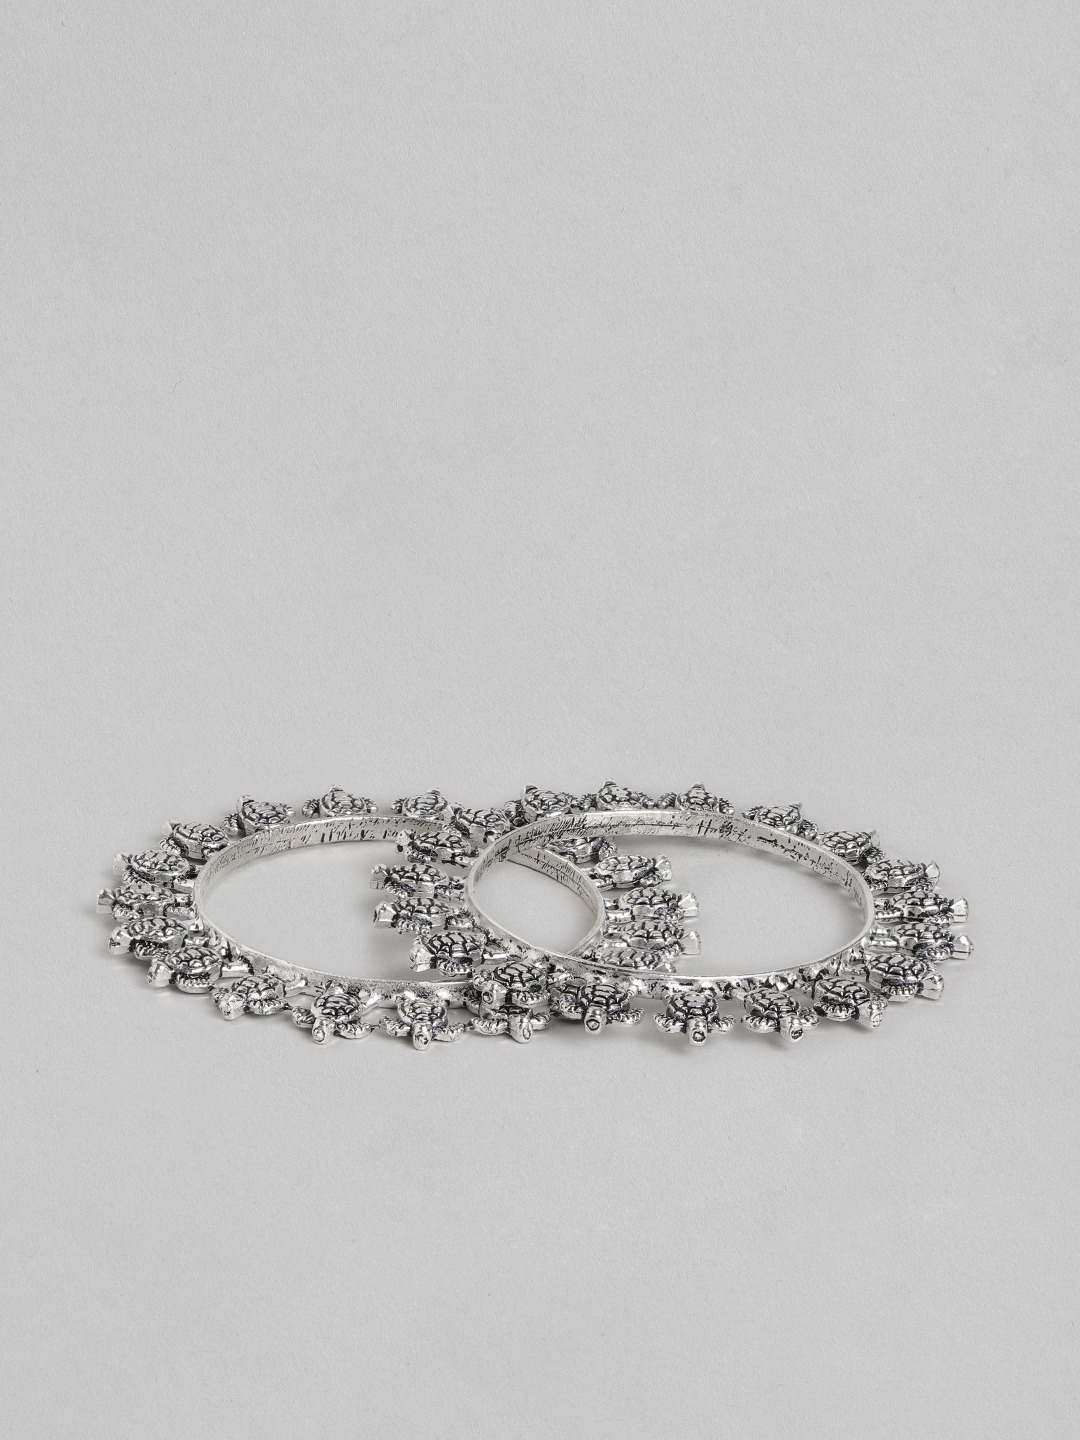 Polished Sterling Silver Bangle-Style Wristband Bracelet - Glam and Glow |  NOVICA